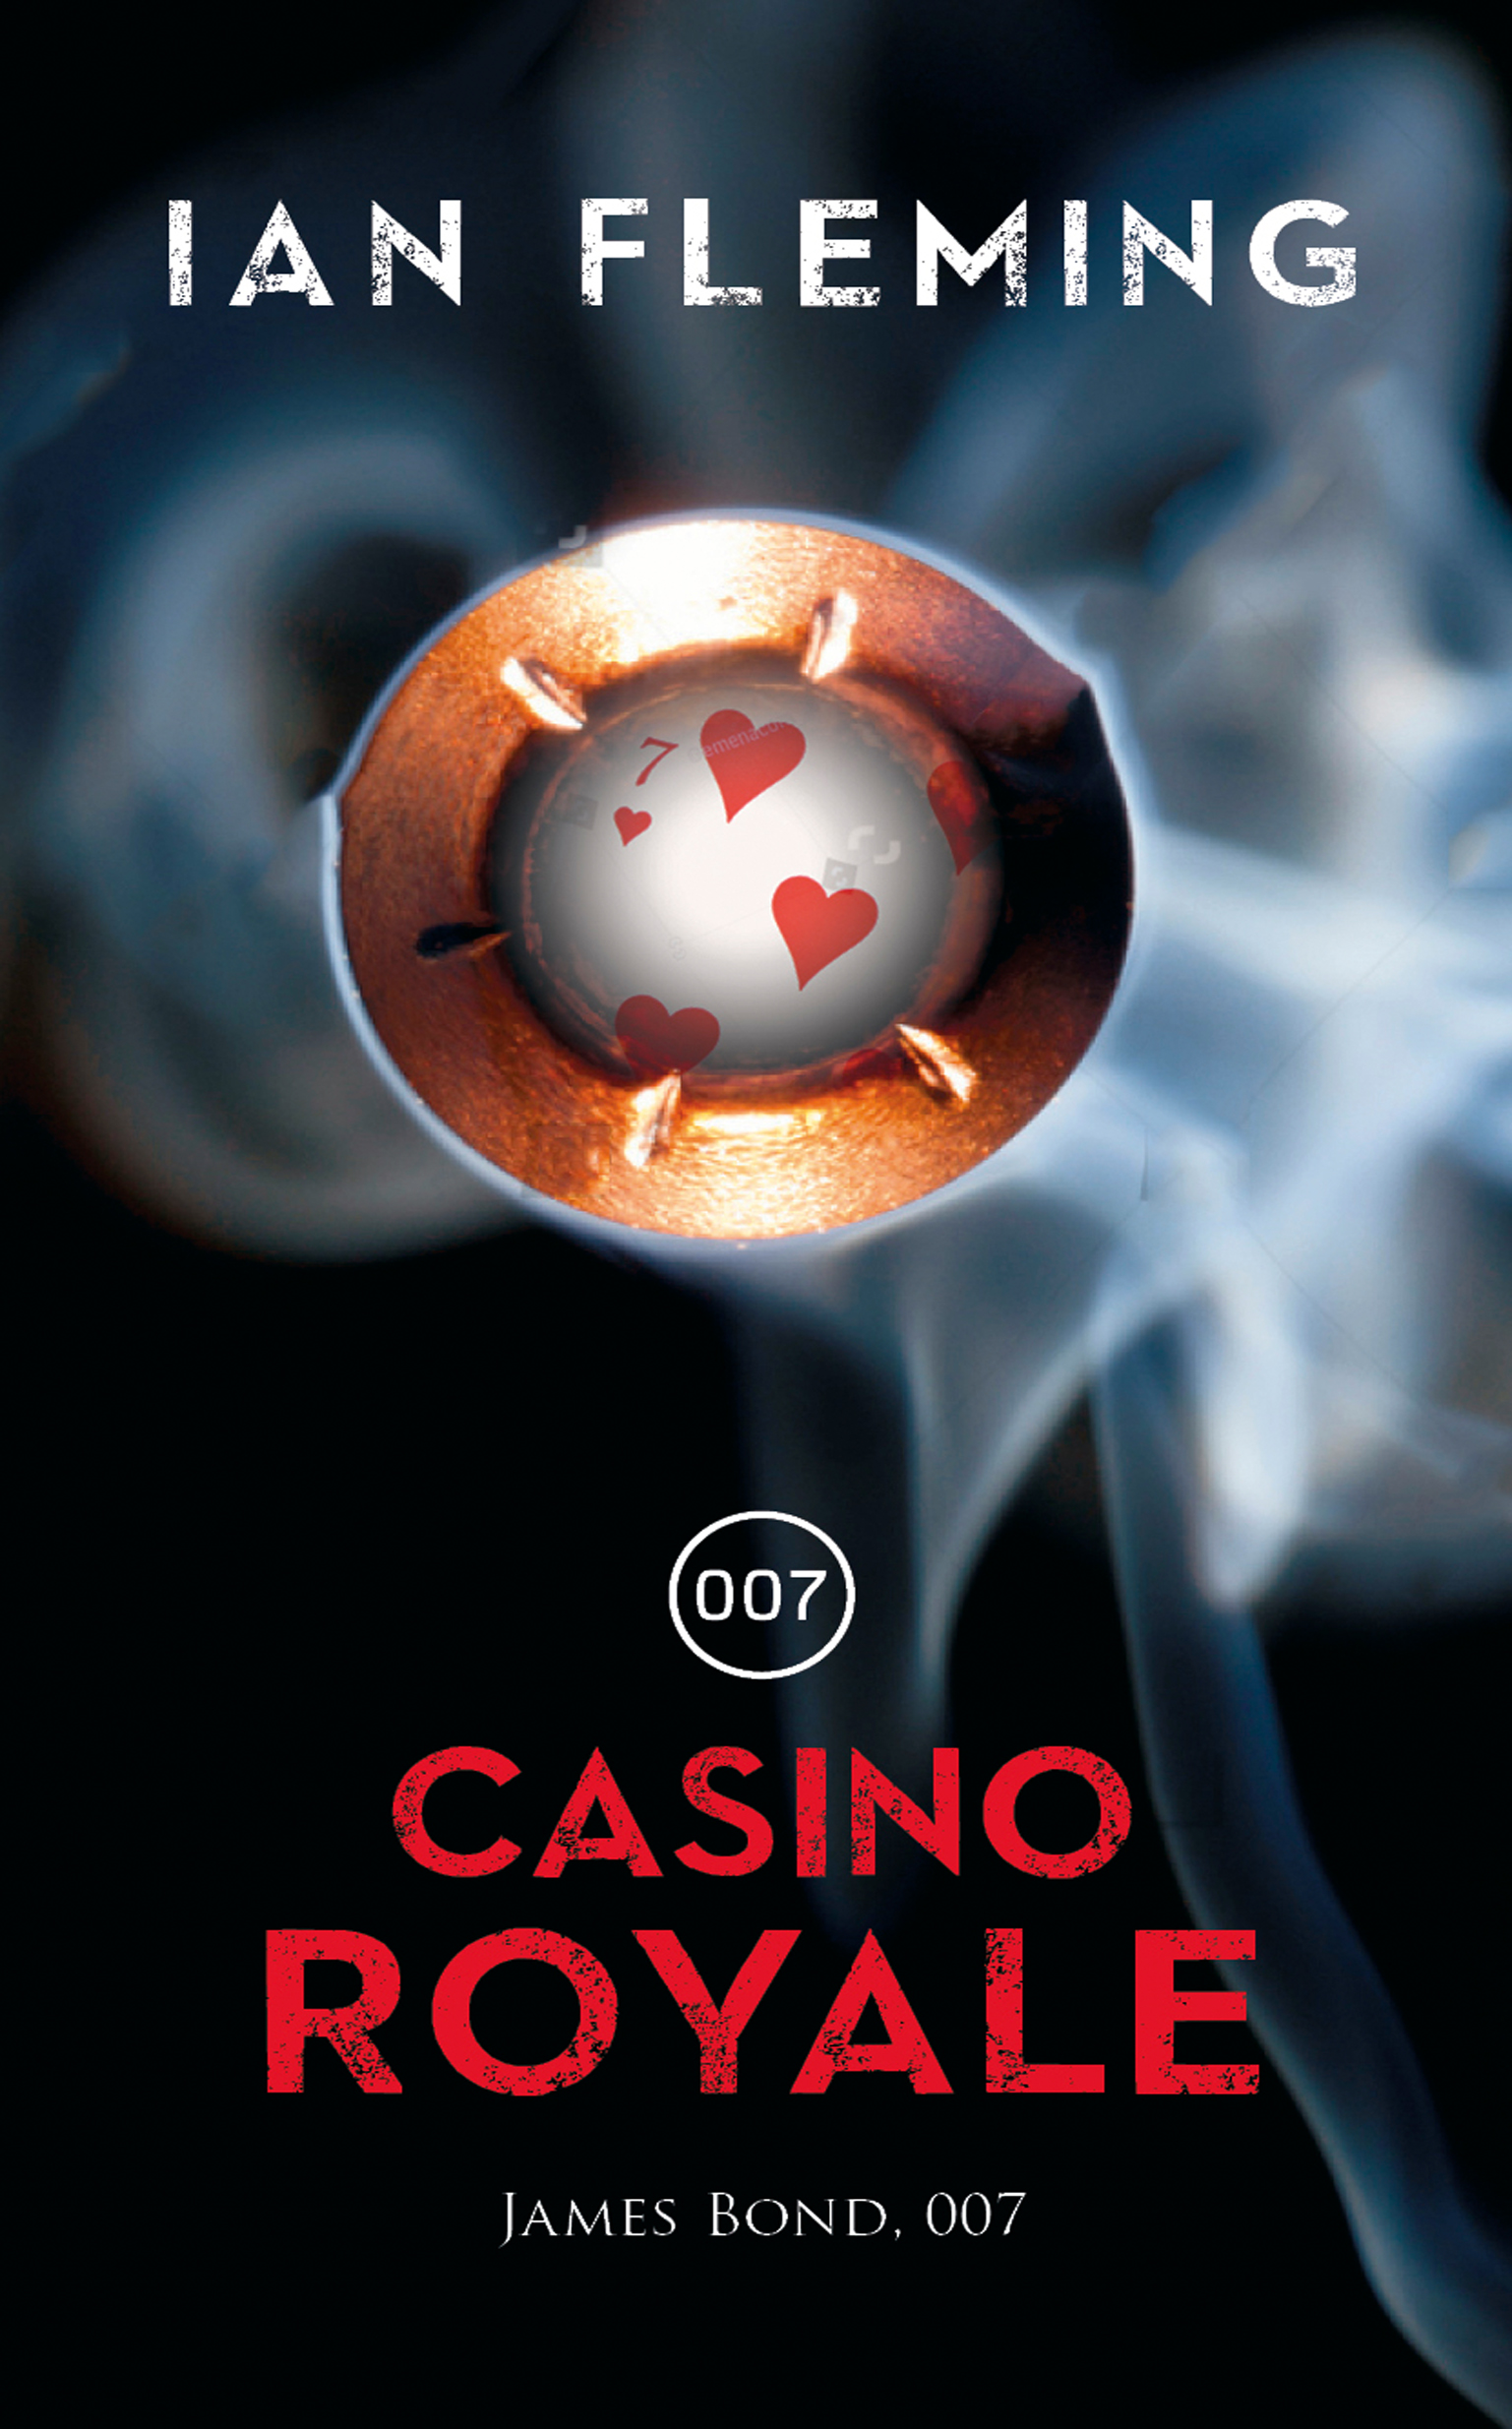 Casino Royale - Ian Fleming